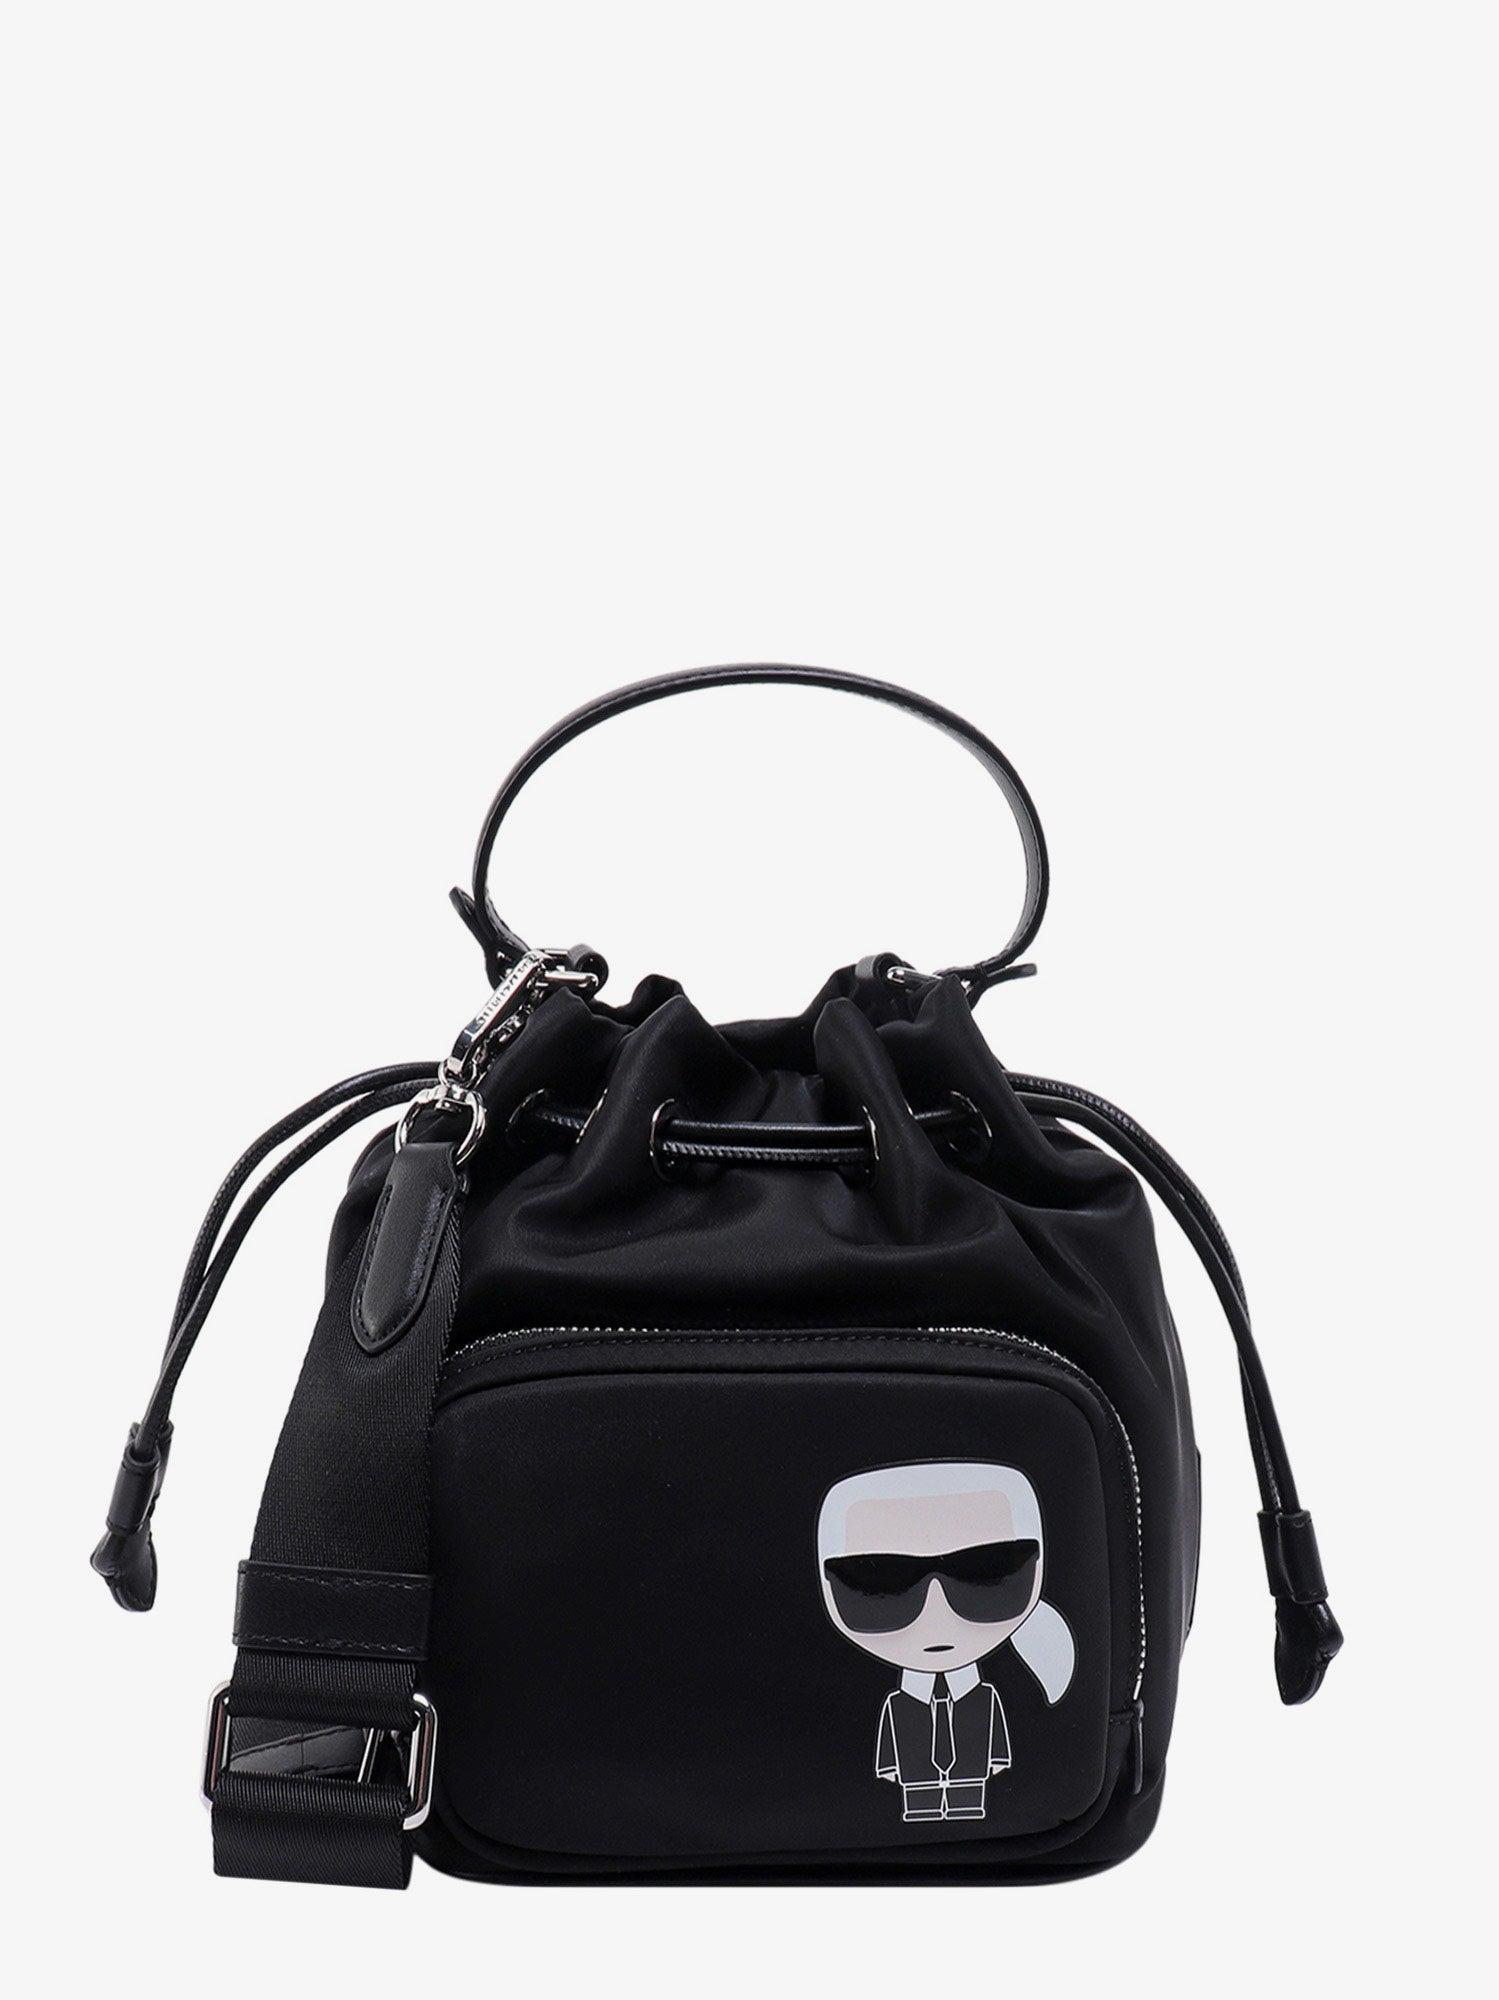 Karl Lagerfeld Leather Shoulder Bags in Black | Lyst